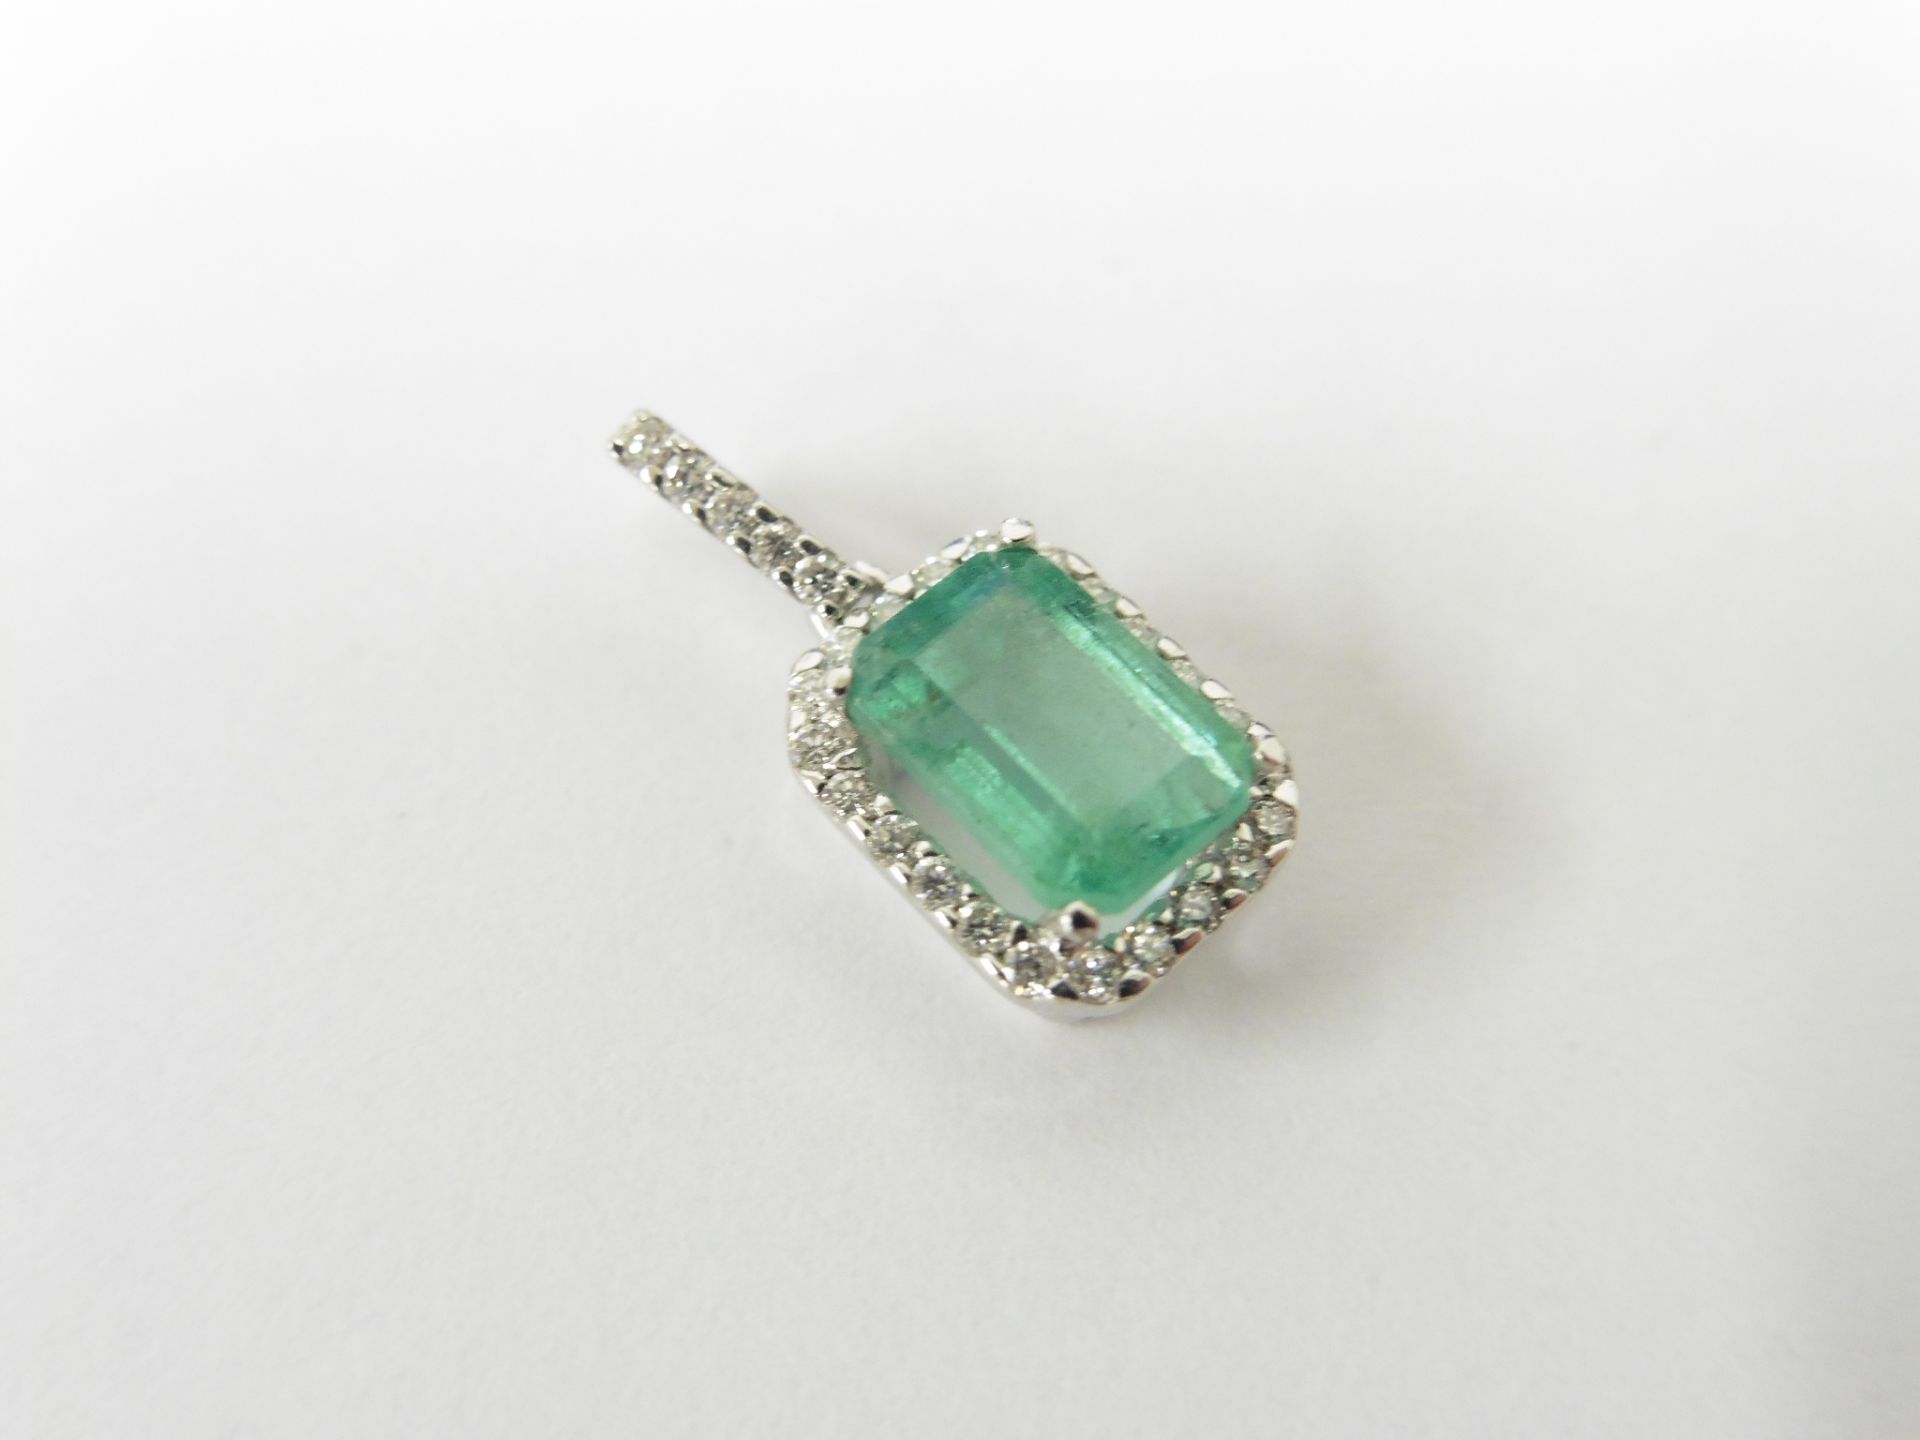 Emerald Diamond Pendant Set in 18ct White Gold - Image 2 of 4